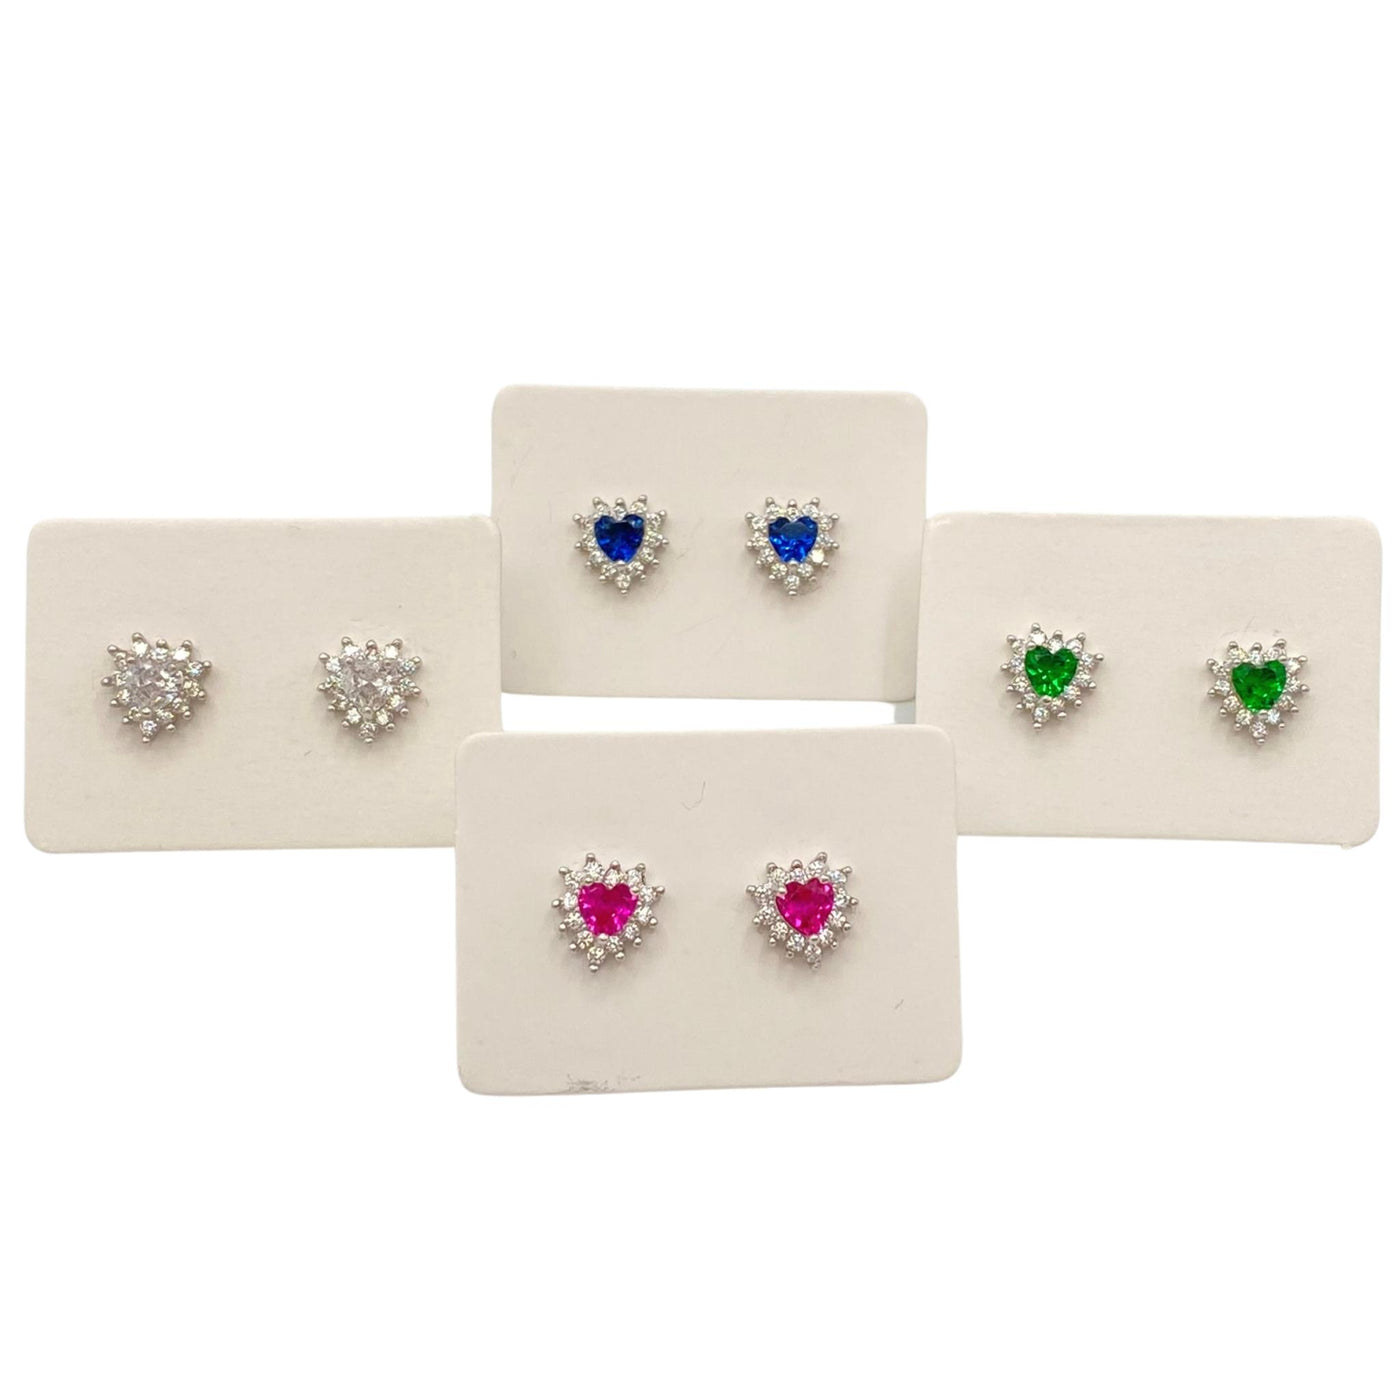 Pack of 4 heart earrings